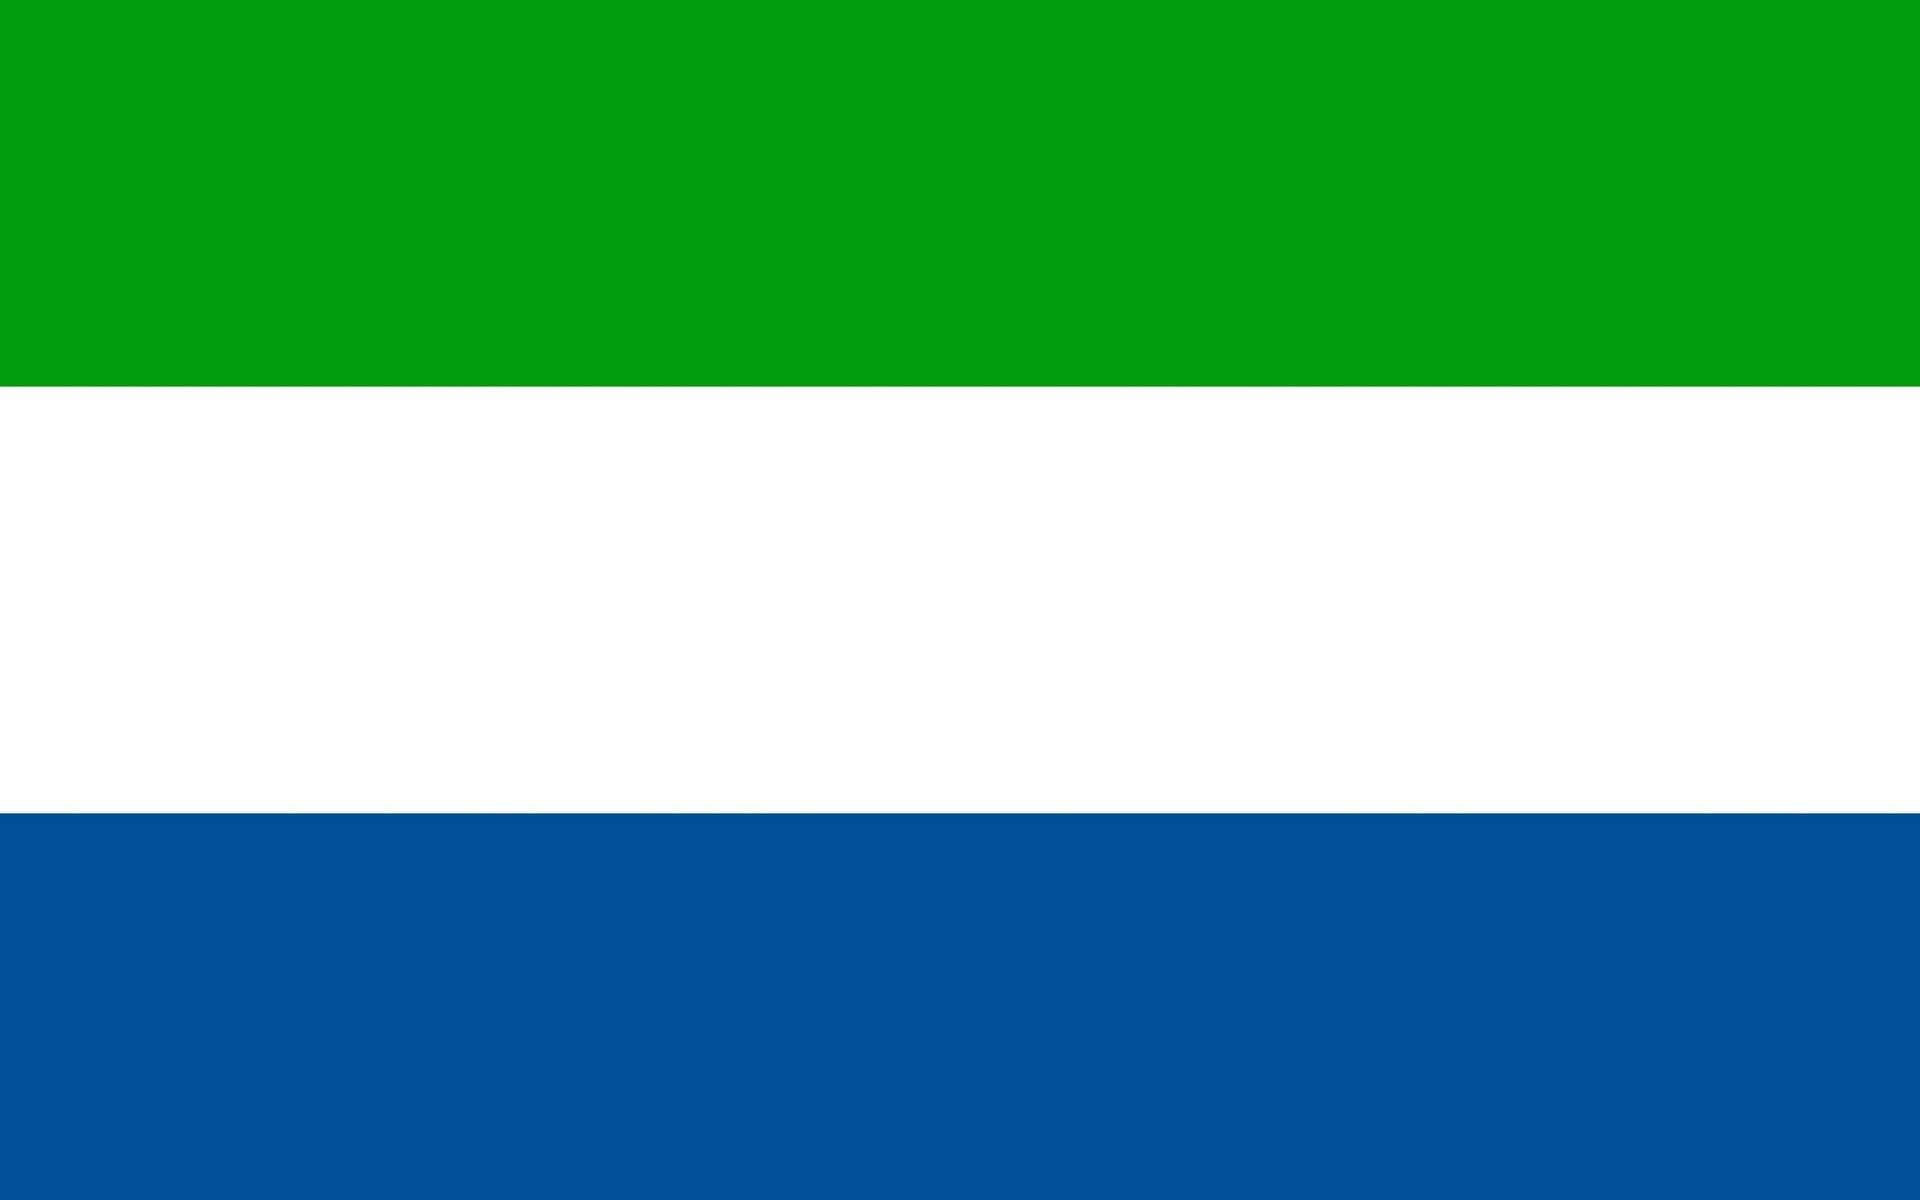 Sierra Leone Simple Flag Wallpaper